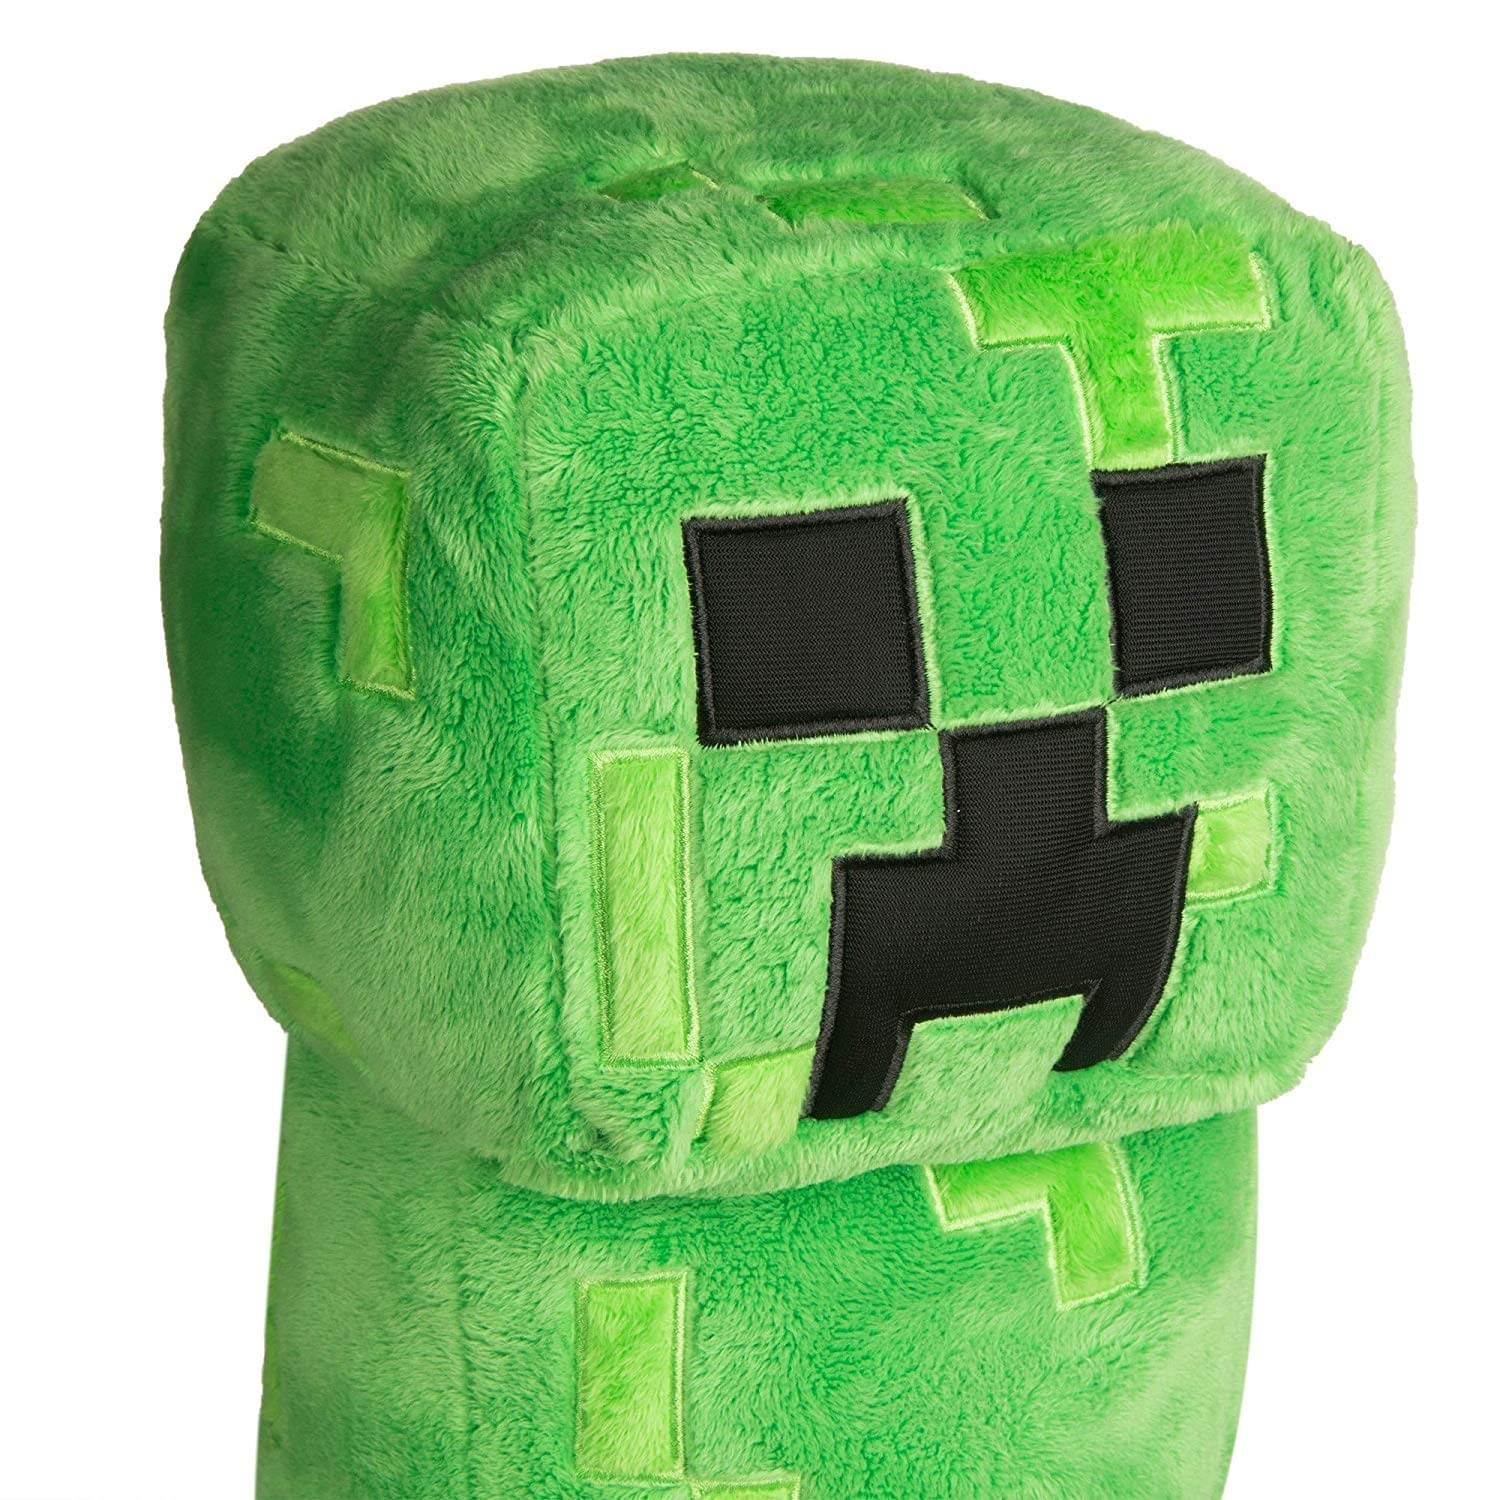 Mua JINX Minecraft Grand Adventure Creeper Plush Stuffed Toy, Green, 16